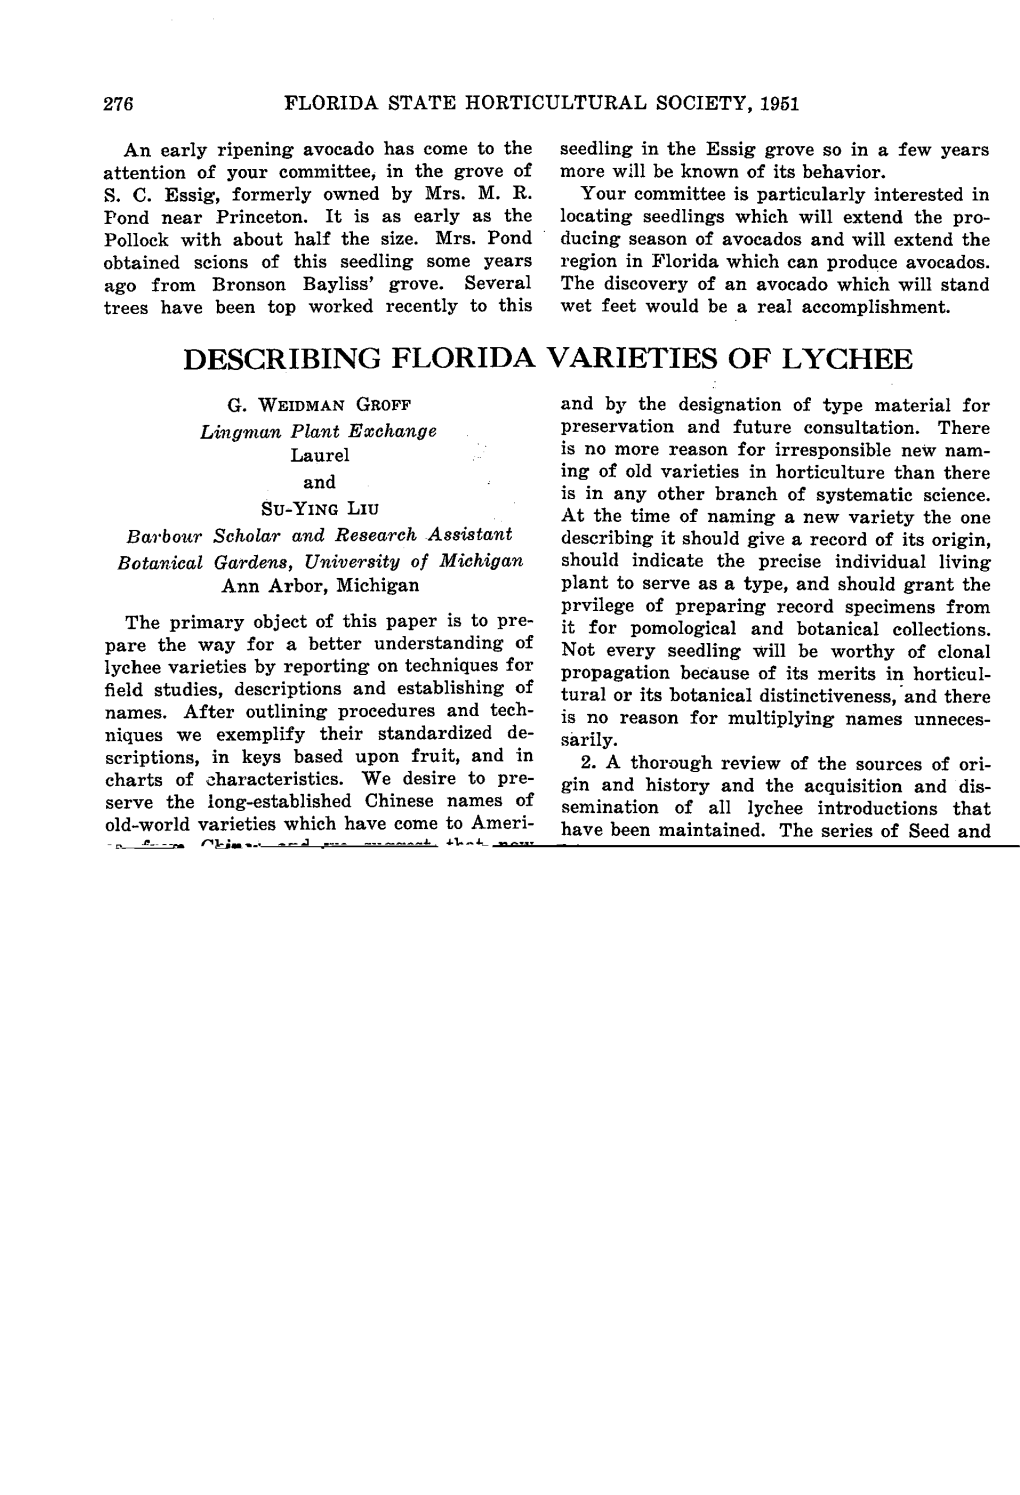 Describing Florida Varieties of Lyghee